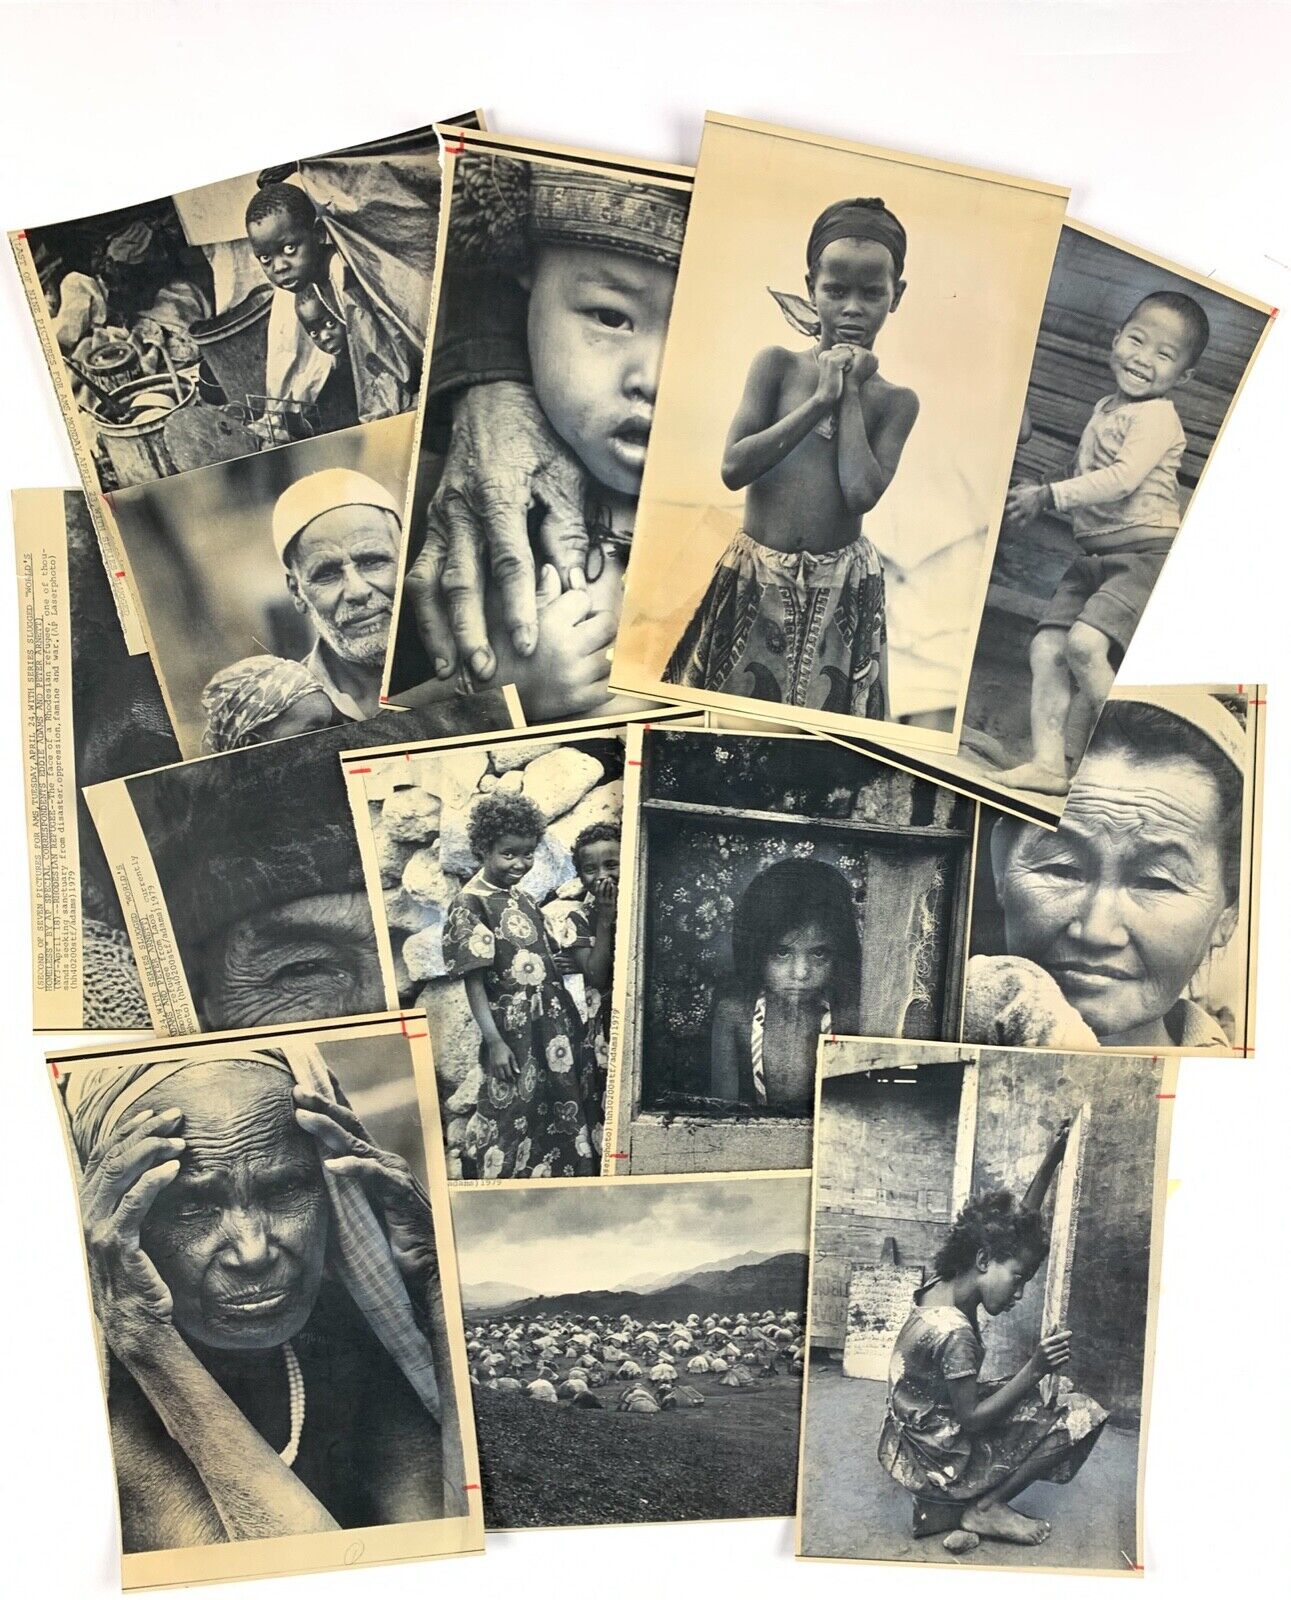 SET of 14 Press Photos 1979 Photo Essay Refugees by Eddie Adams AP Photographer